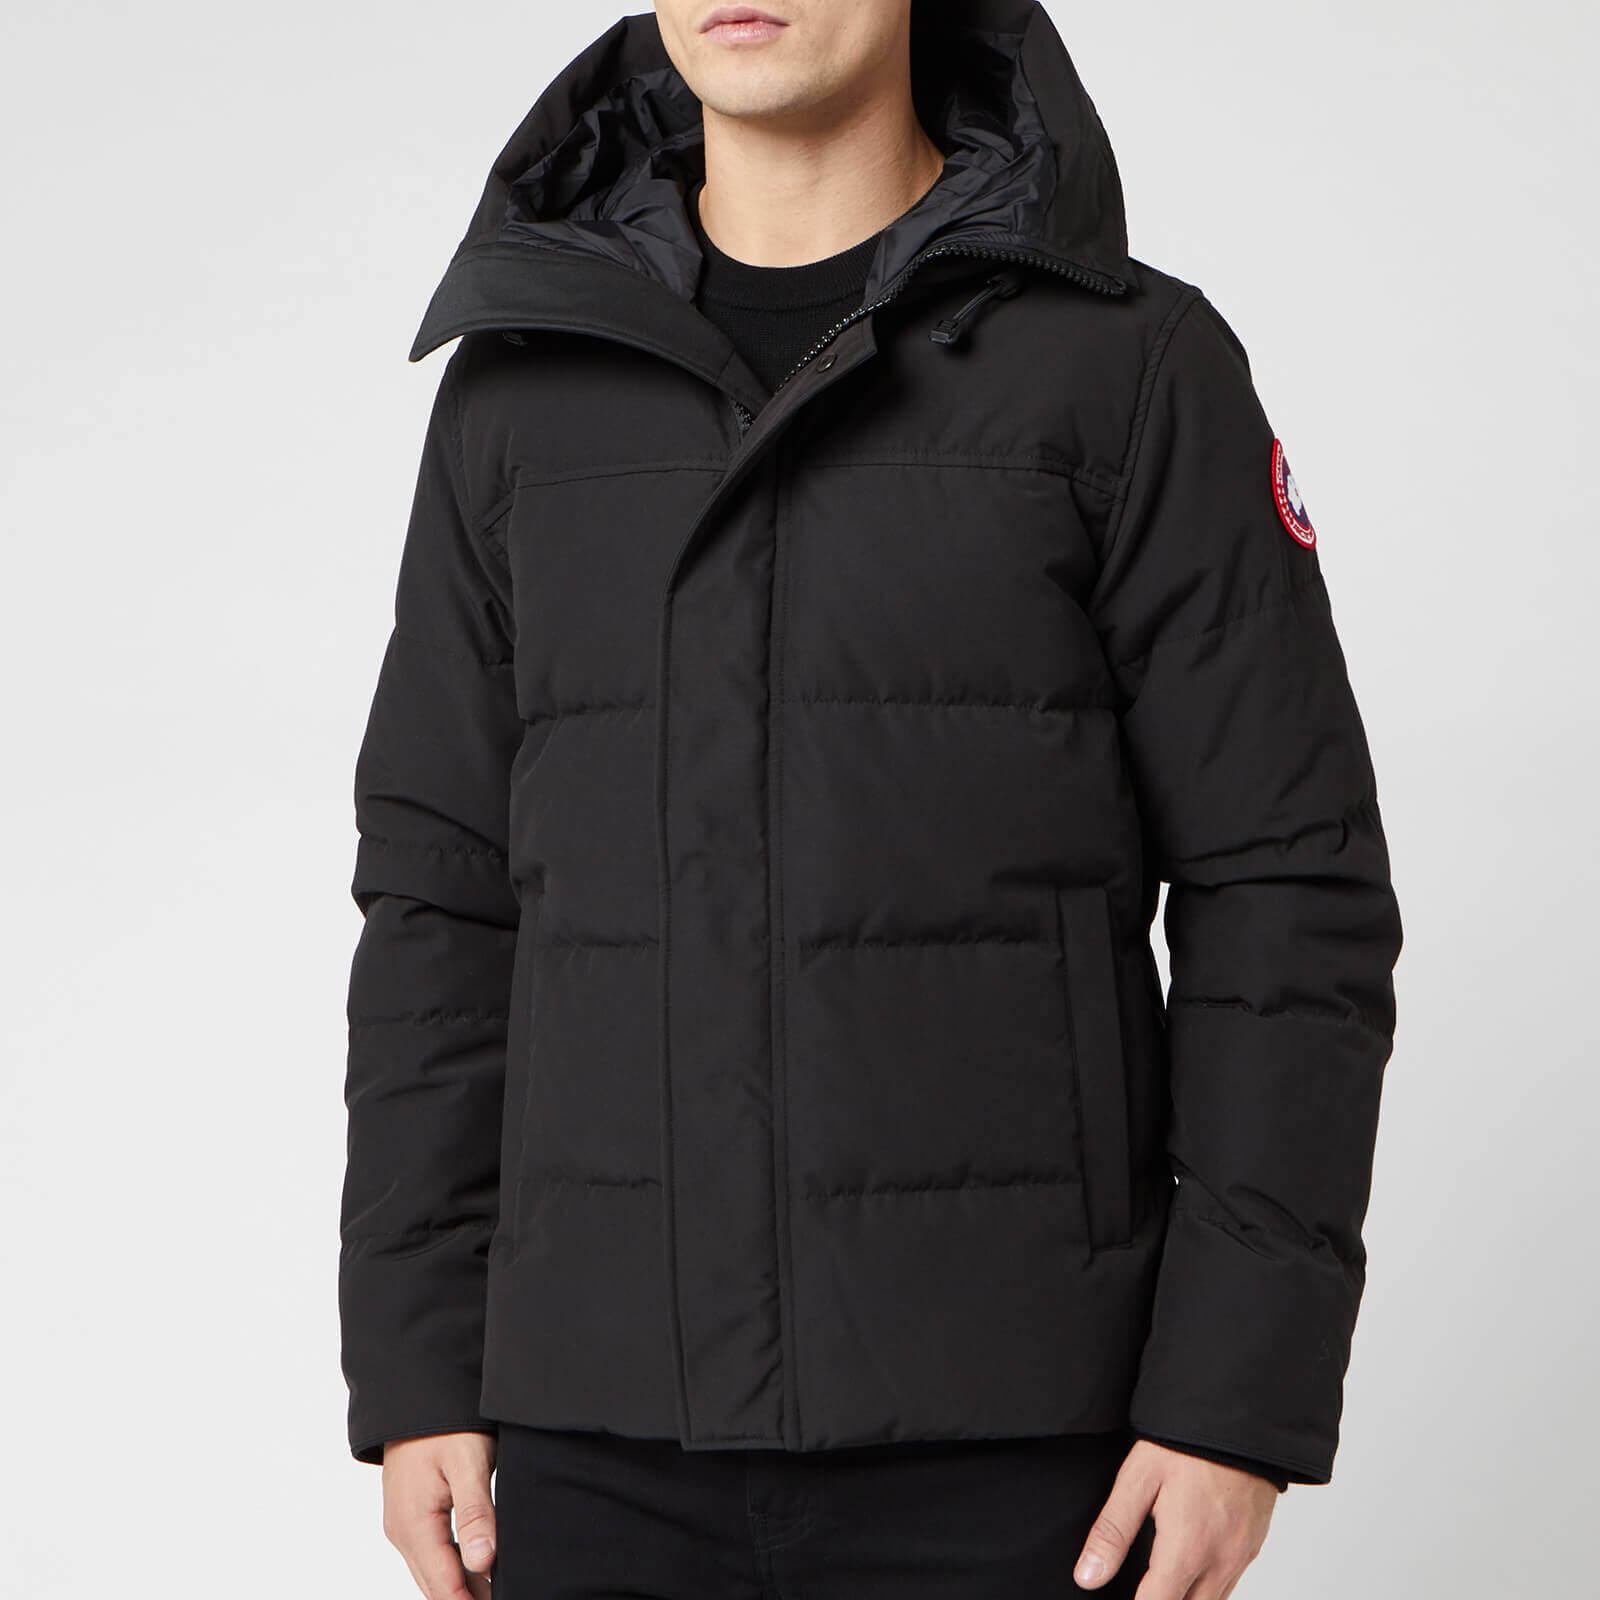 Canada Goose Goose Macmillan Parka Jacket in Black for Men - Save 43% - Lyst